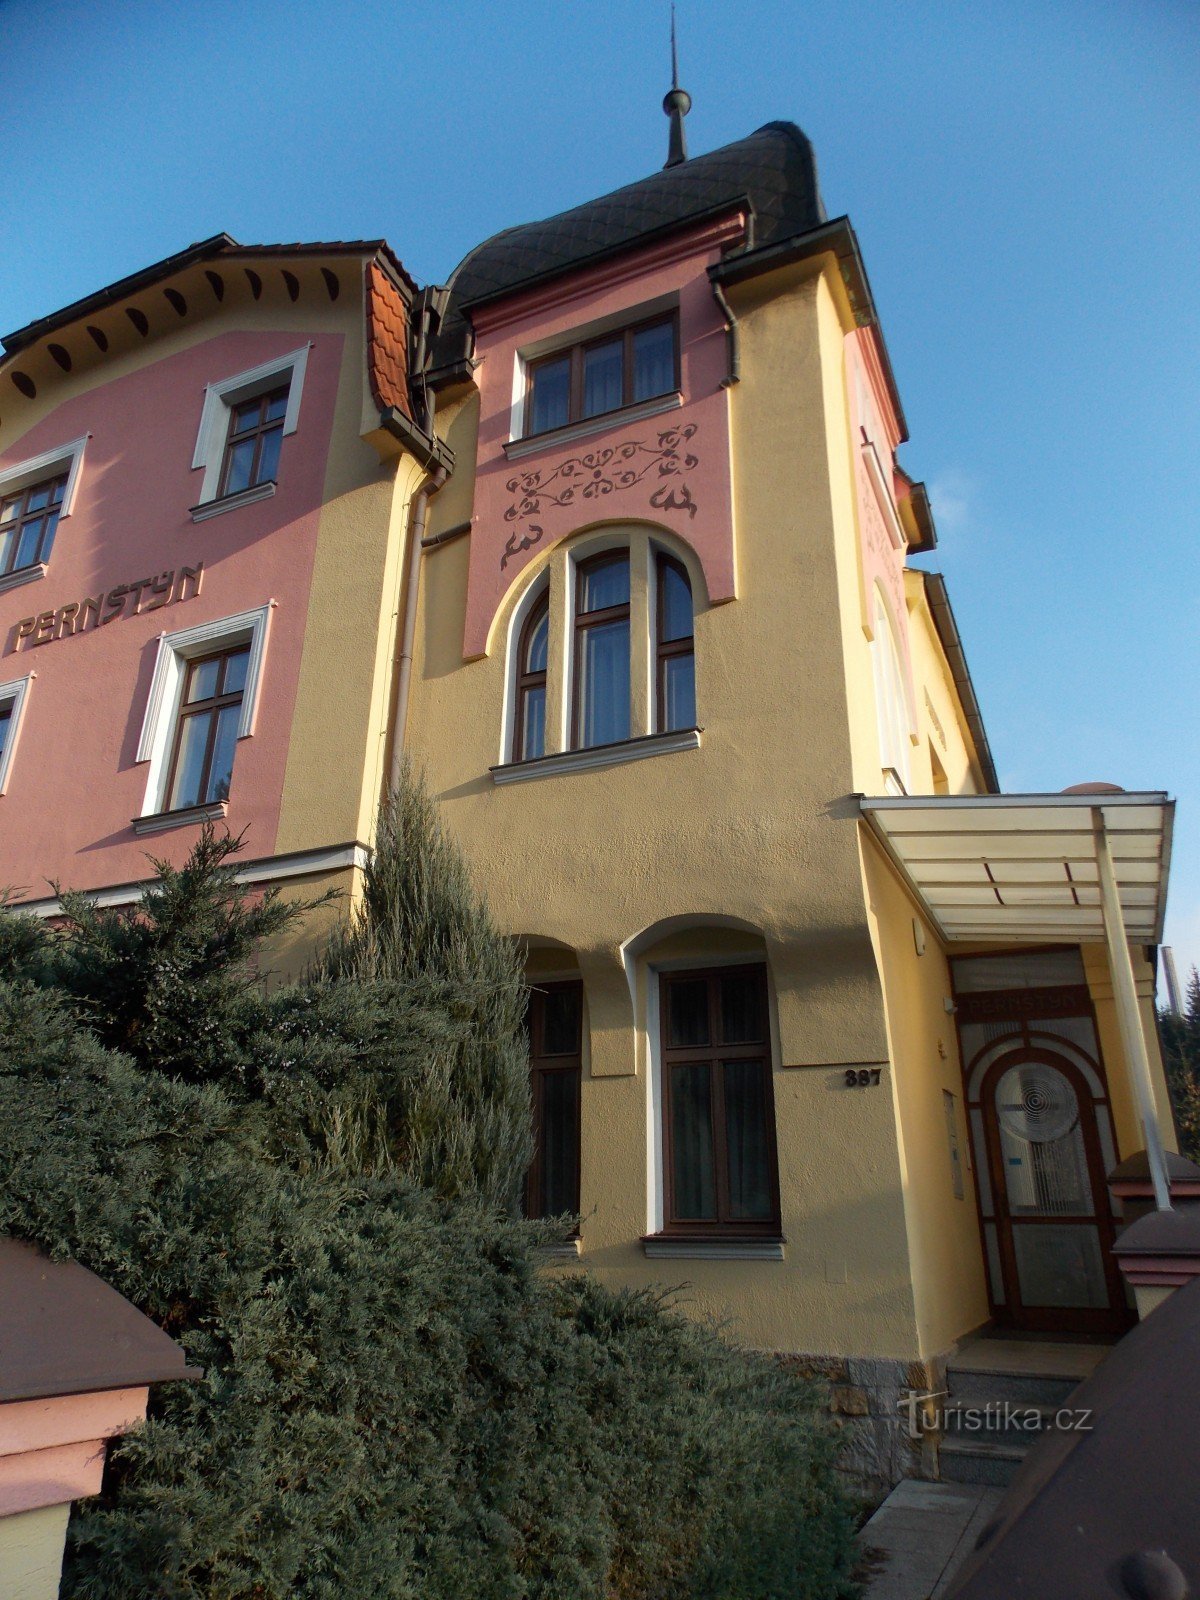 Kurhotel - Vila Antoaneta in Luhačovice